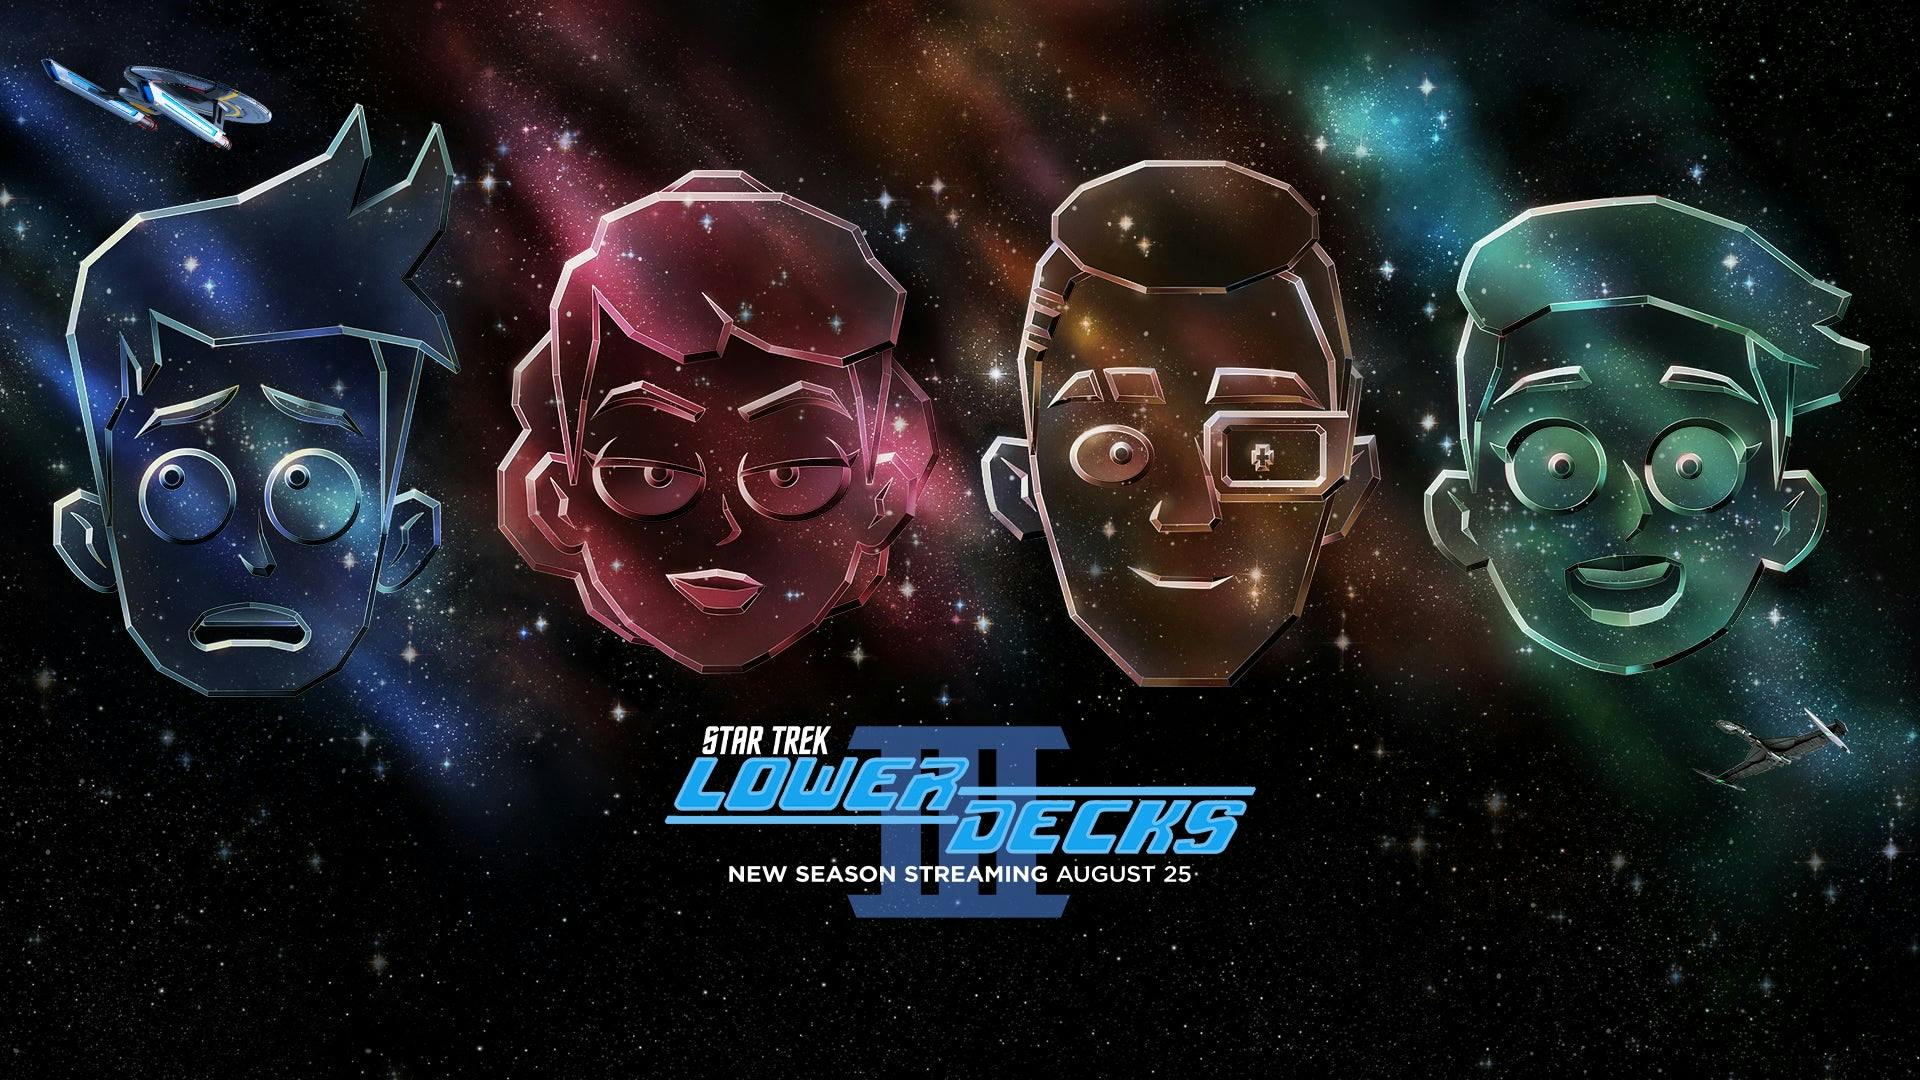 Four character posters of Boimler, Mariner, Rutherford, and Tendi for season three of Star Trek: Lower Decks.